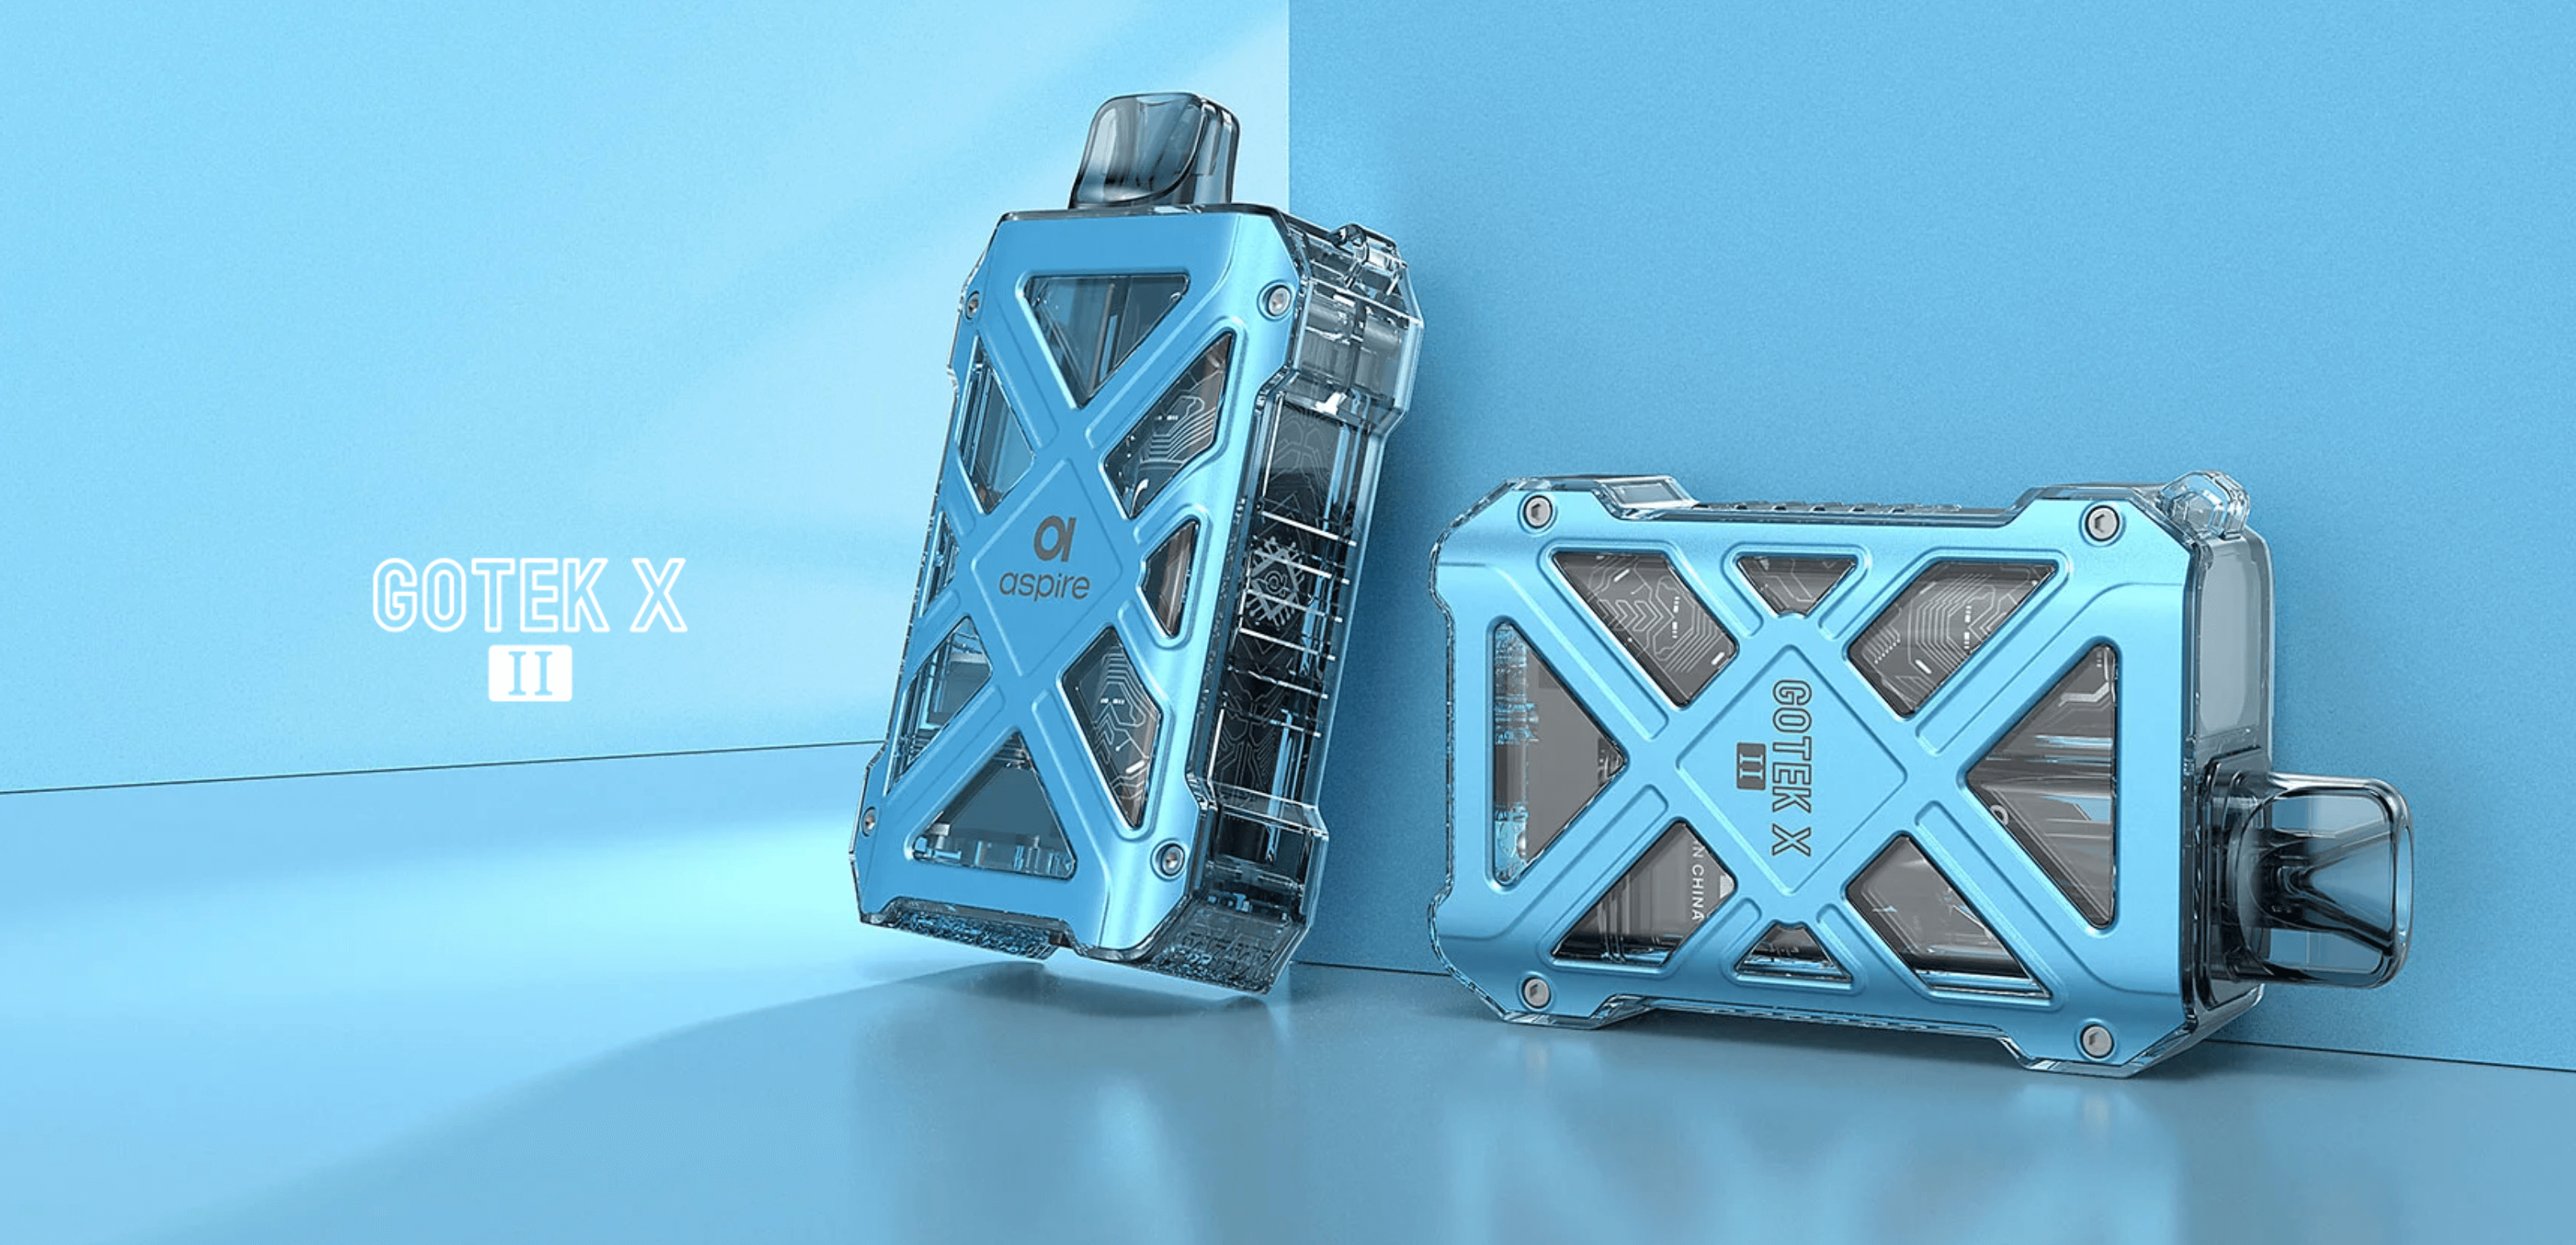 Aspire Gotek X 2 | Two Pastel Blue devices on blue background